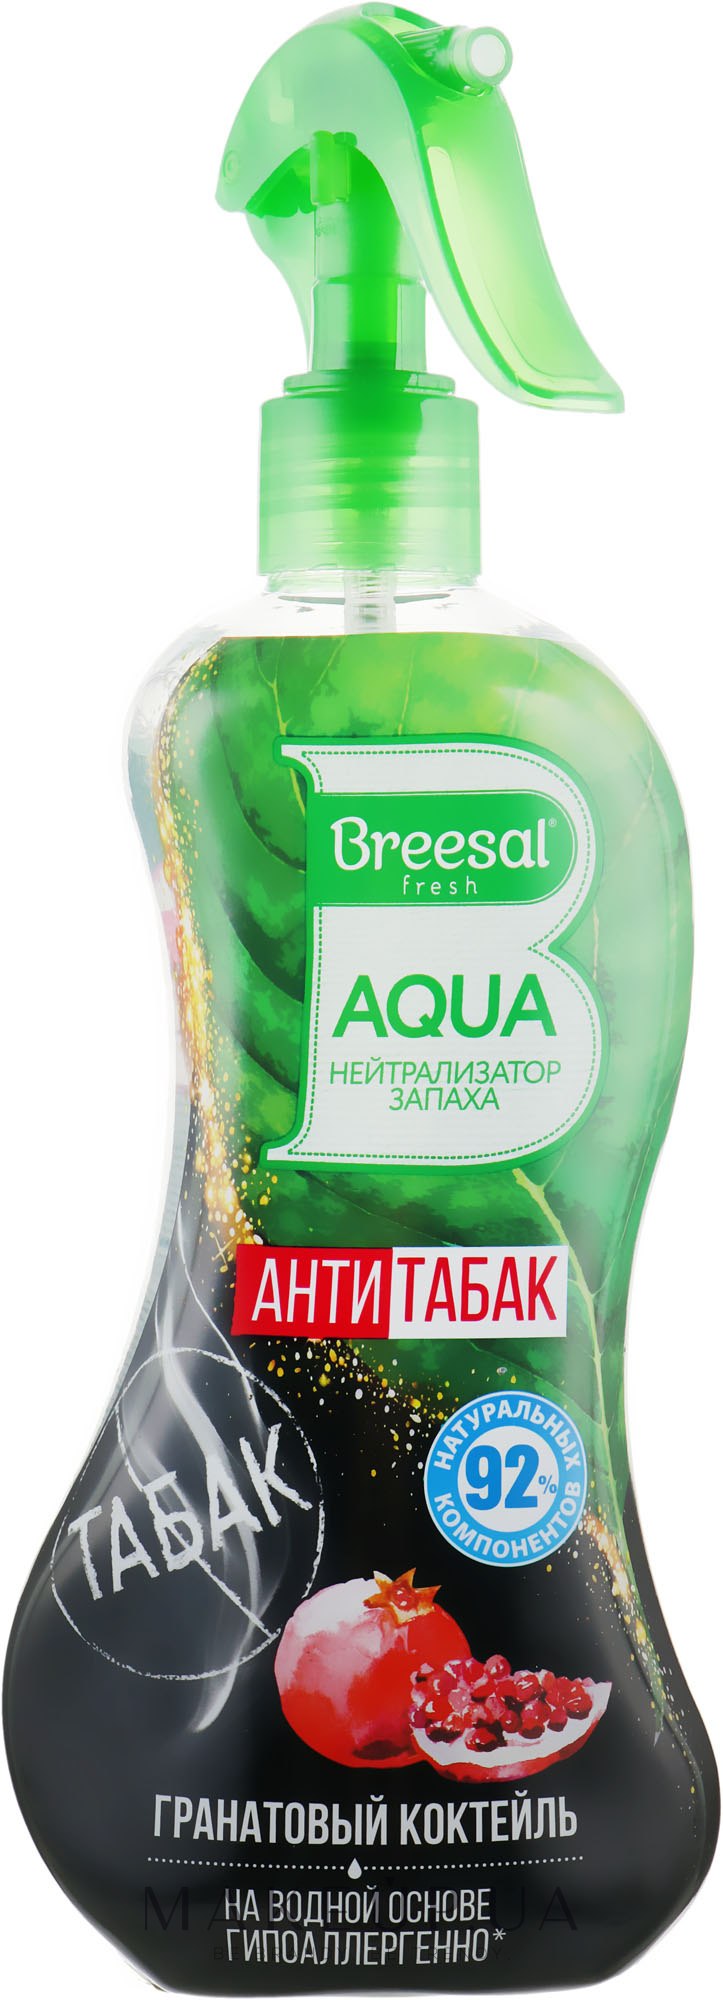 Ароматерапия  Socolor Breesal Aqua-нейтрализатор запаха антитабак Гранатовый коктейль, 375 мл (Breesal, Нейтрализация запаха Breesal Fresh)